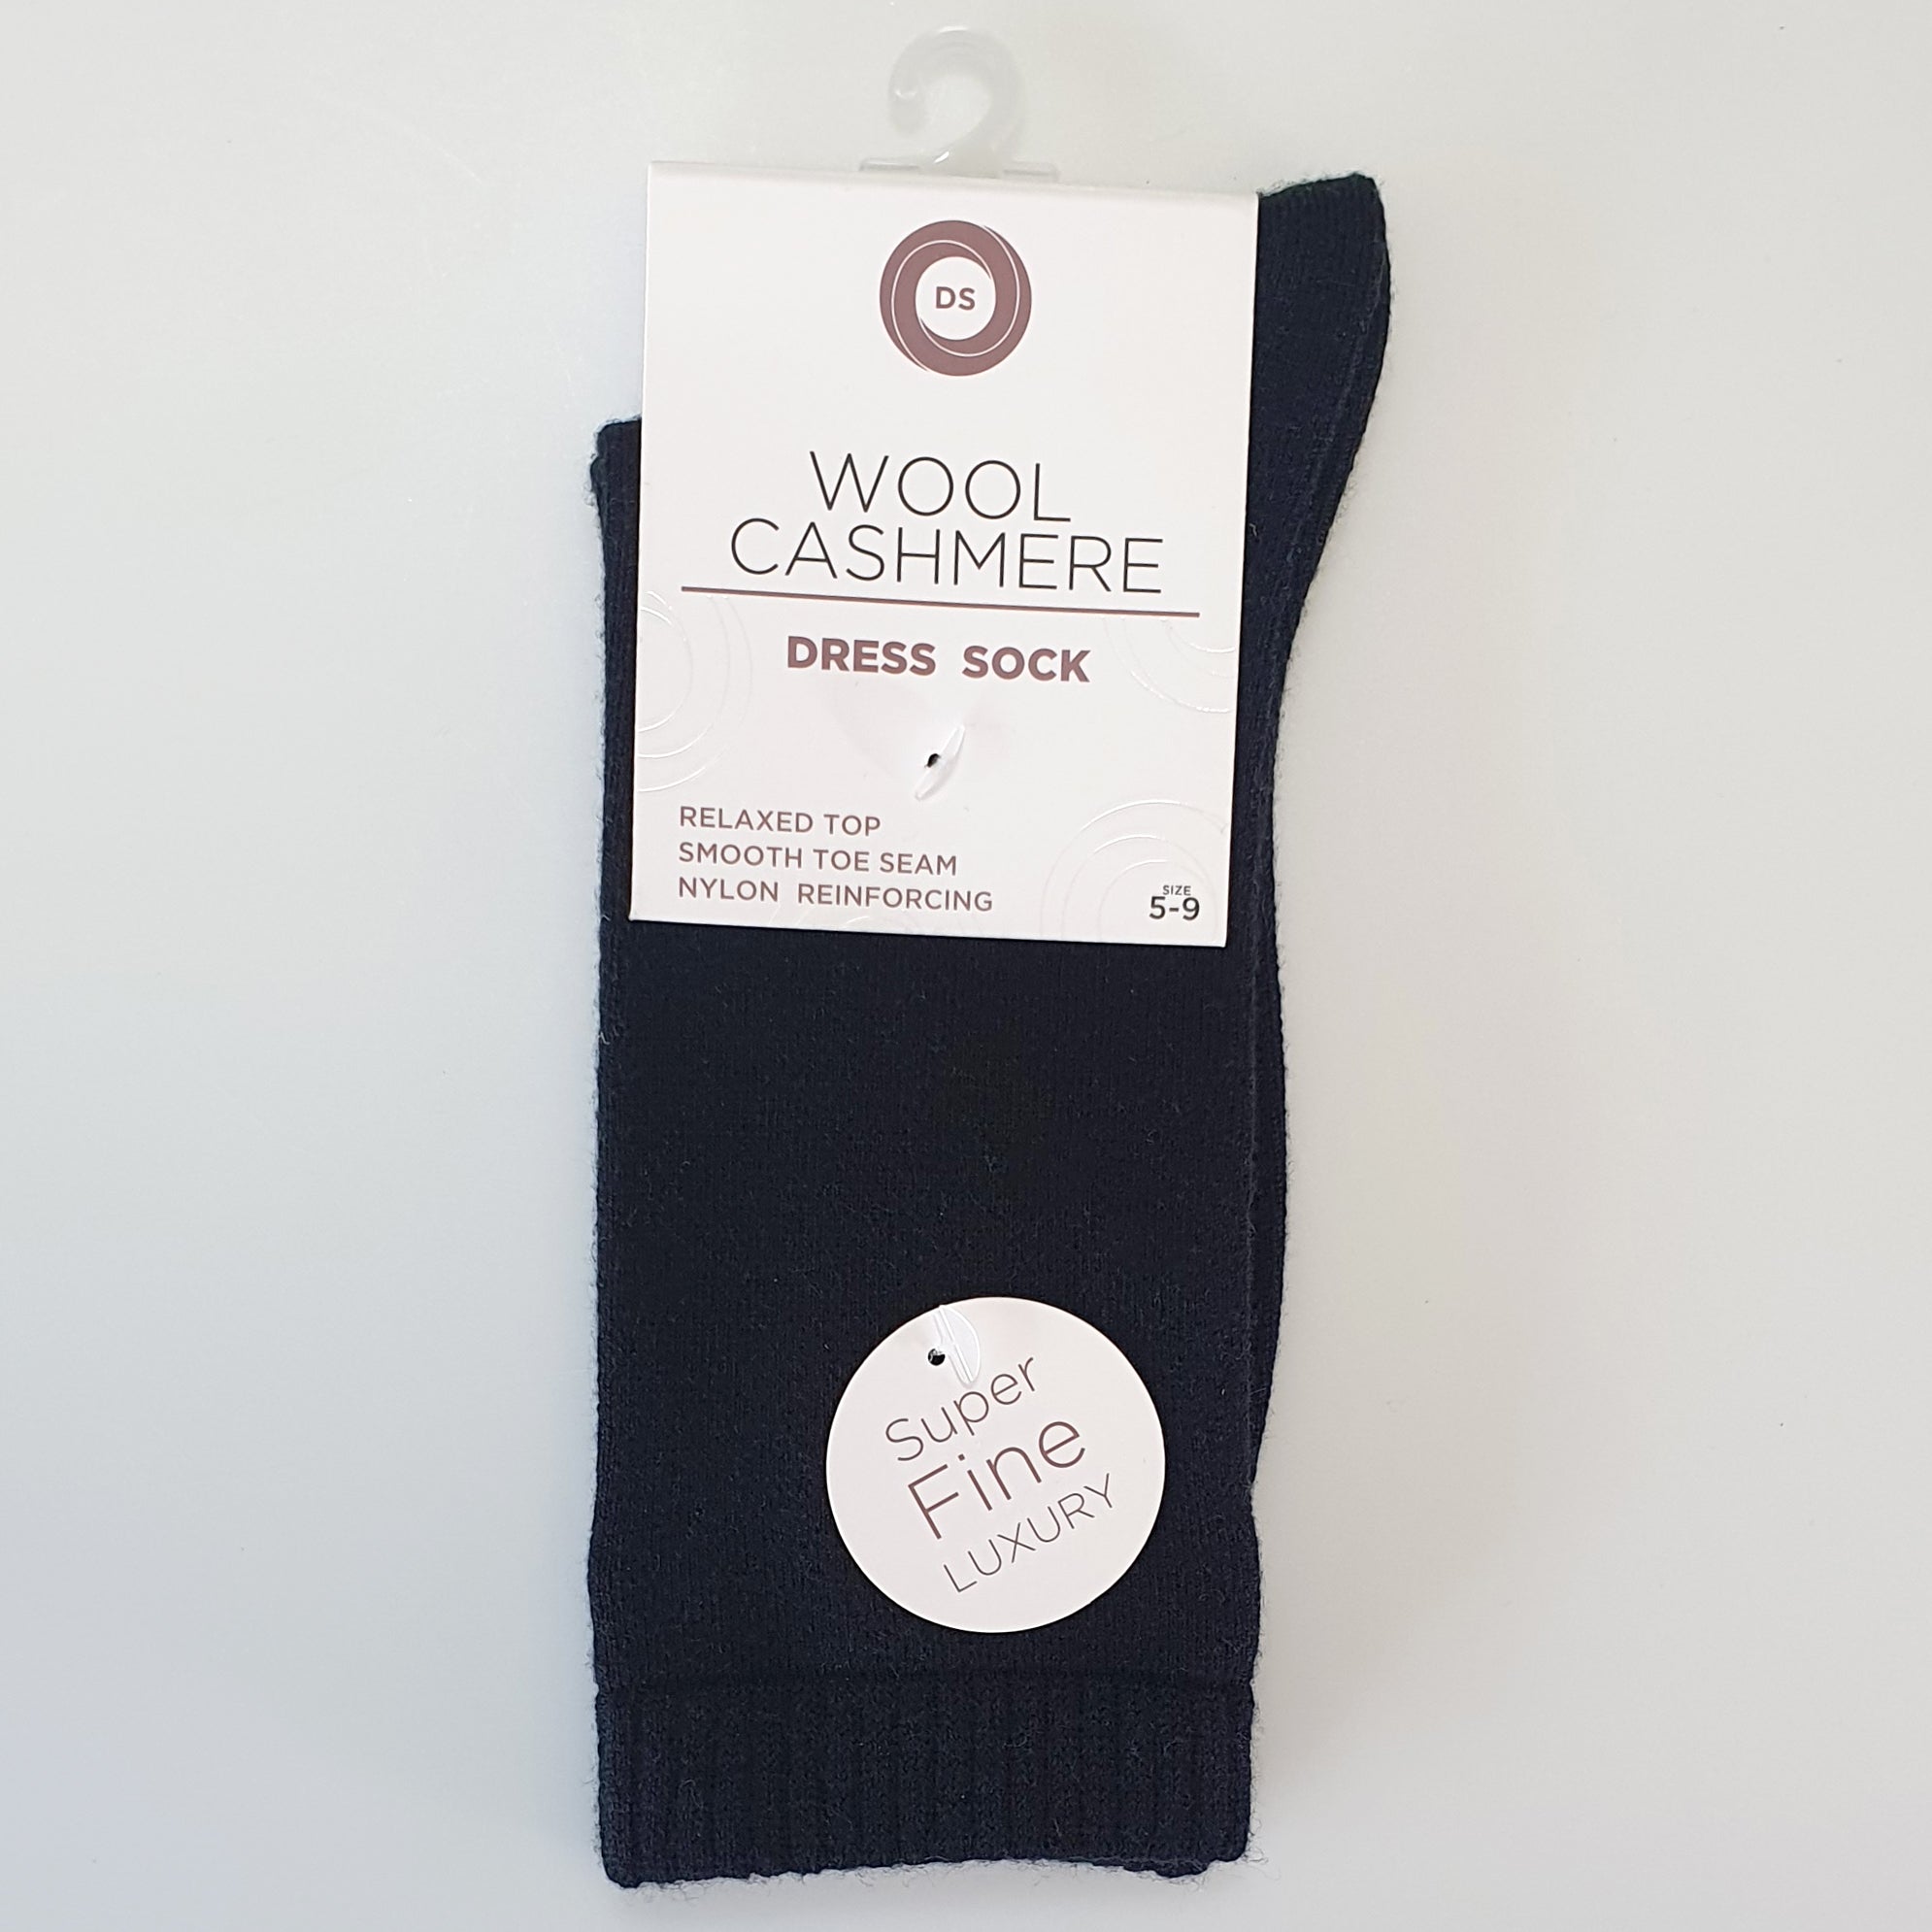 DS Wool Cashmere Dress Socks - Plain Black